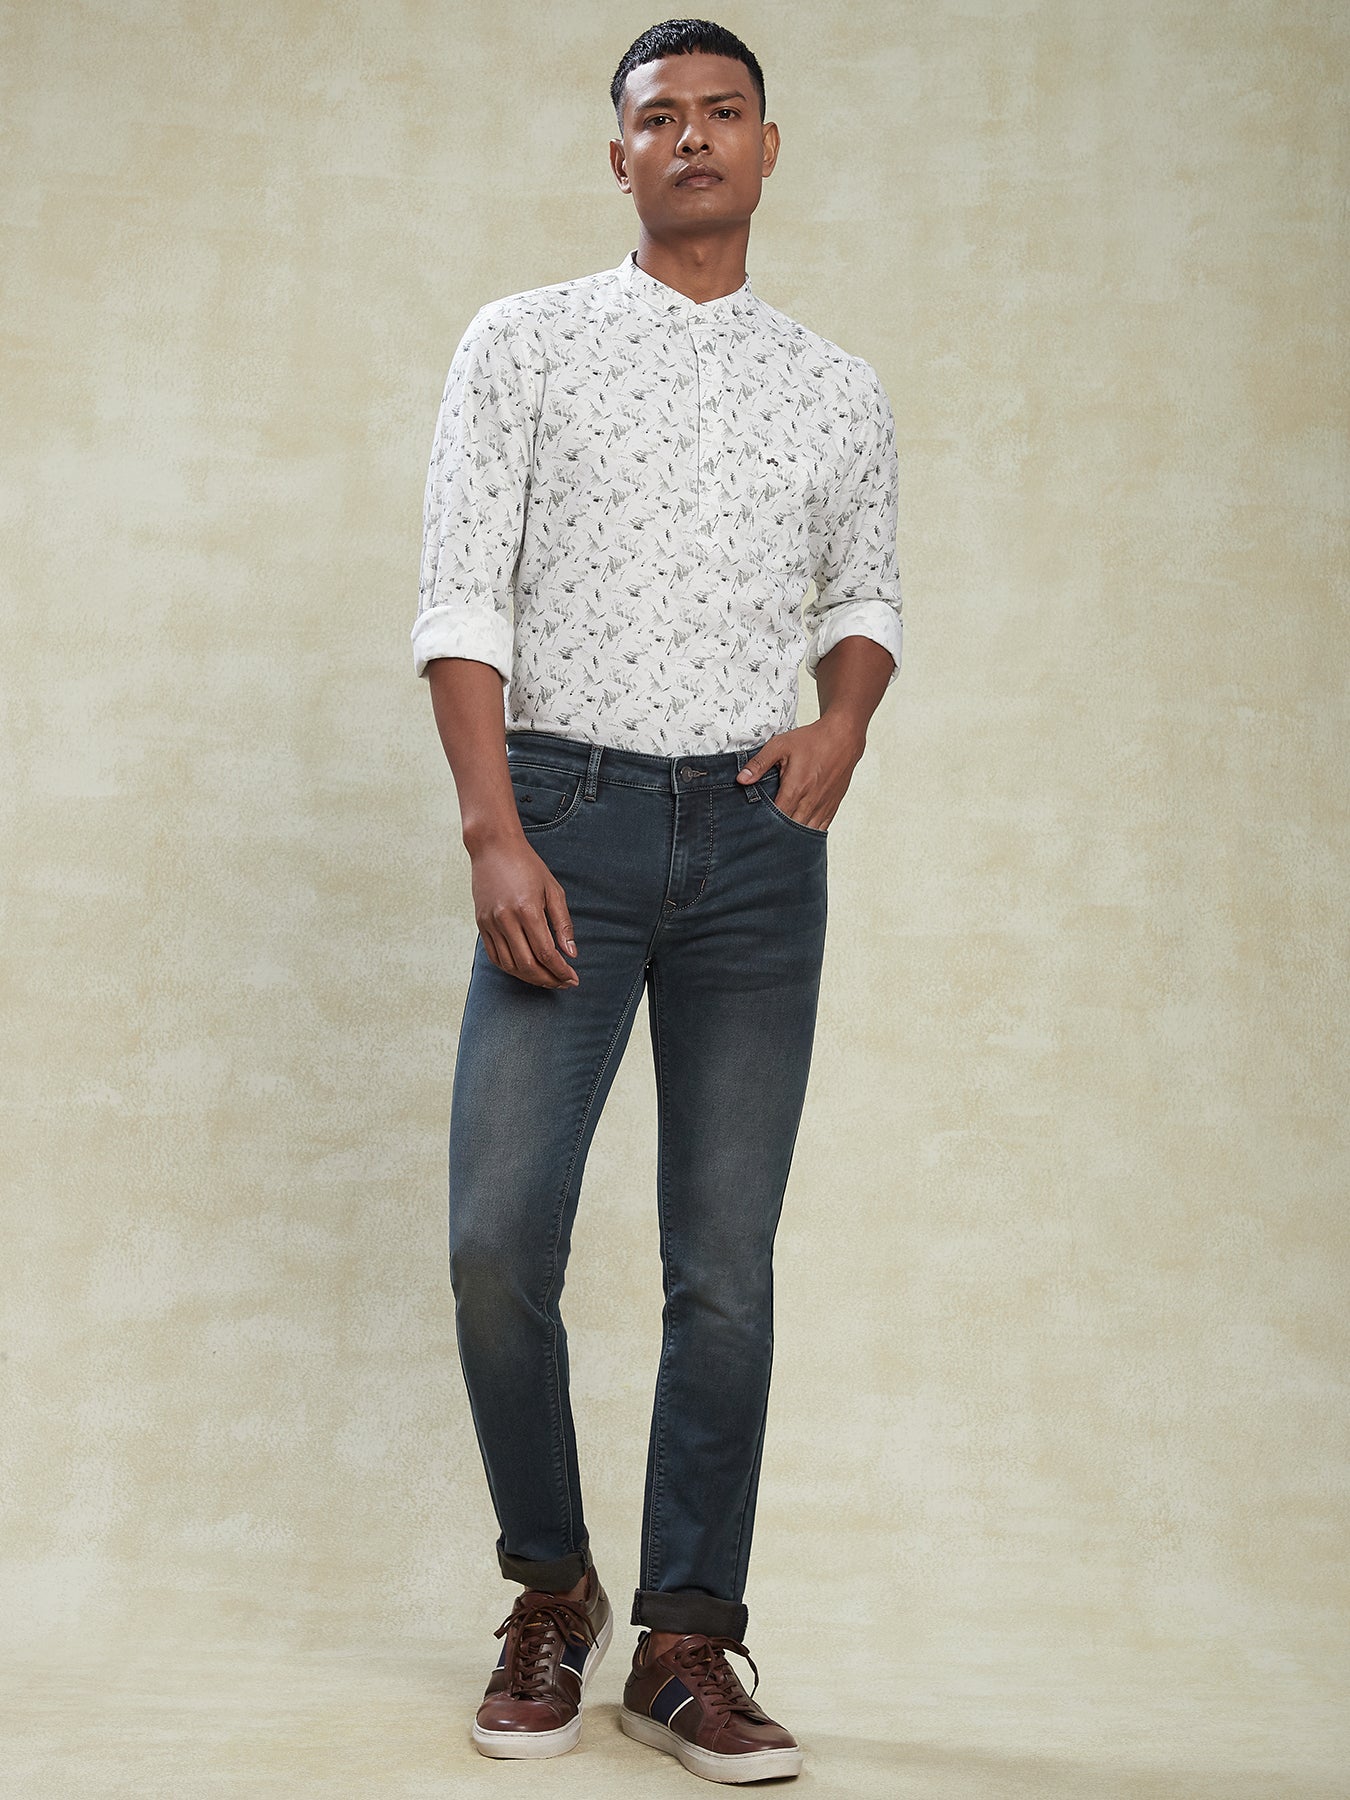 dark-grey-casual-men's-cotton-stretch-jeans---fashion-collection-(plains)